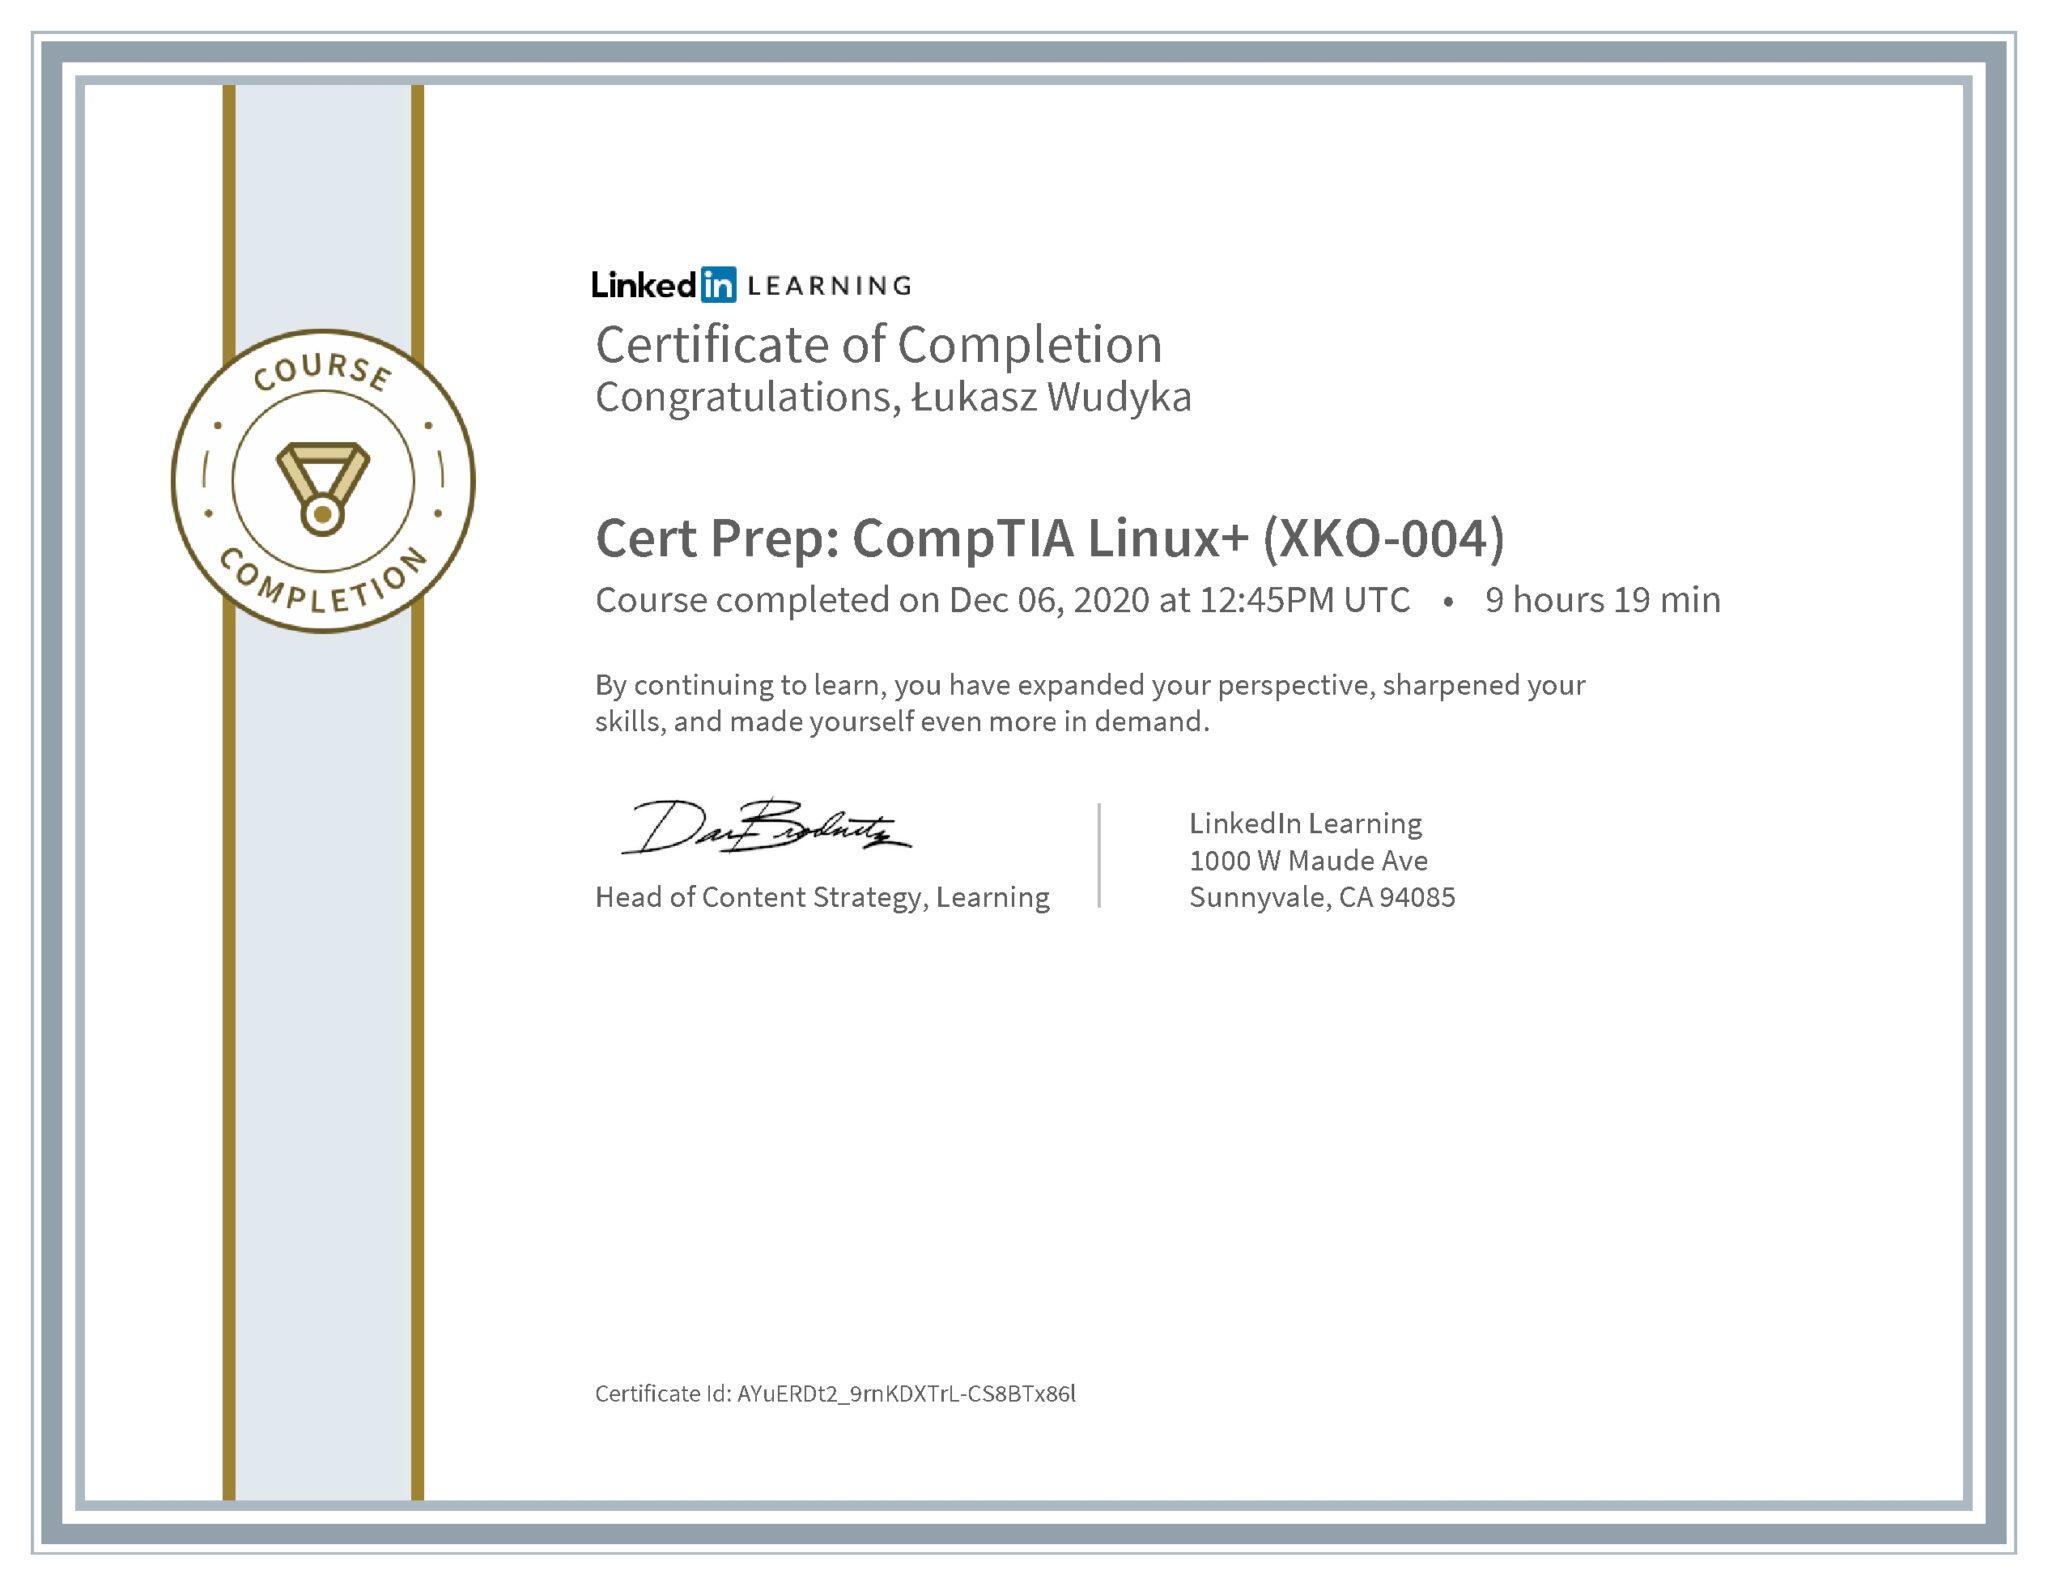 Łukasz Wudyka certyfikat LinkedIn Cert Prep: CompTIA Linux+ (XKO-004)